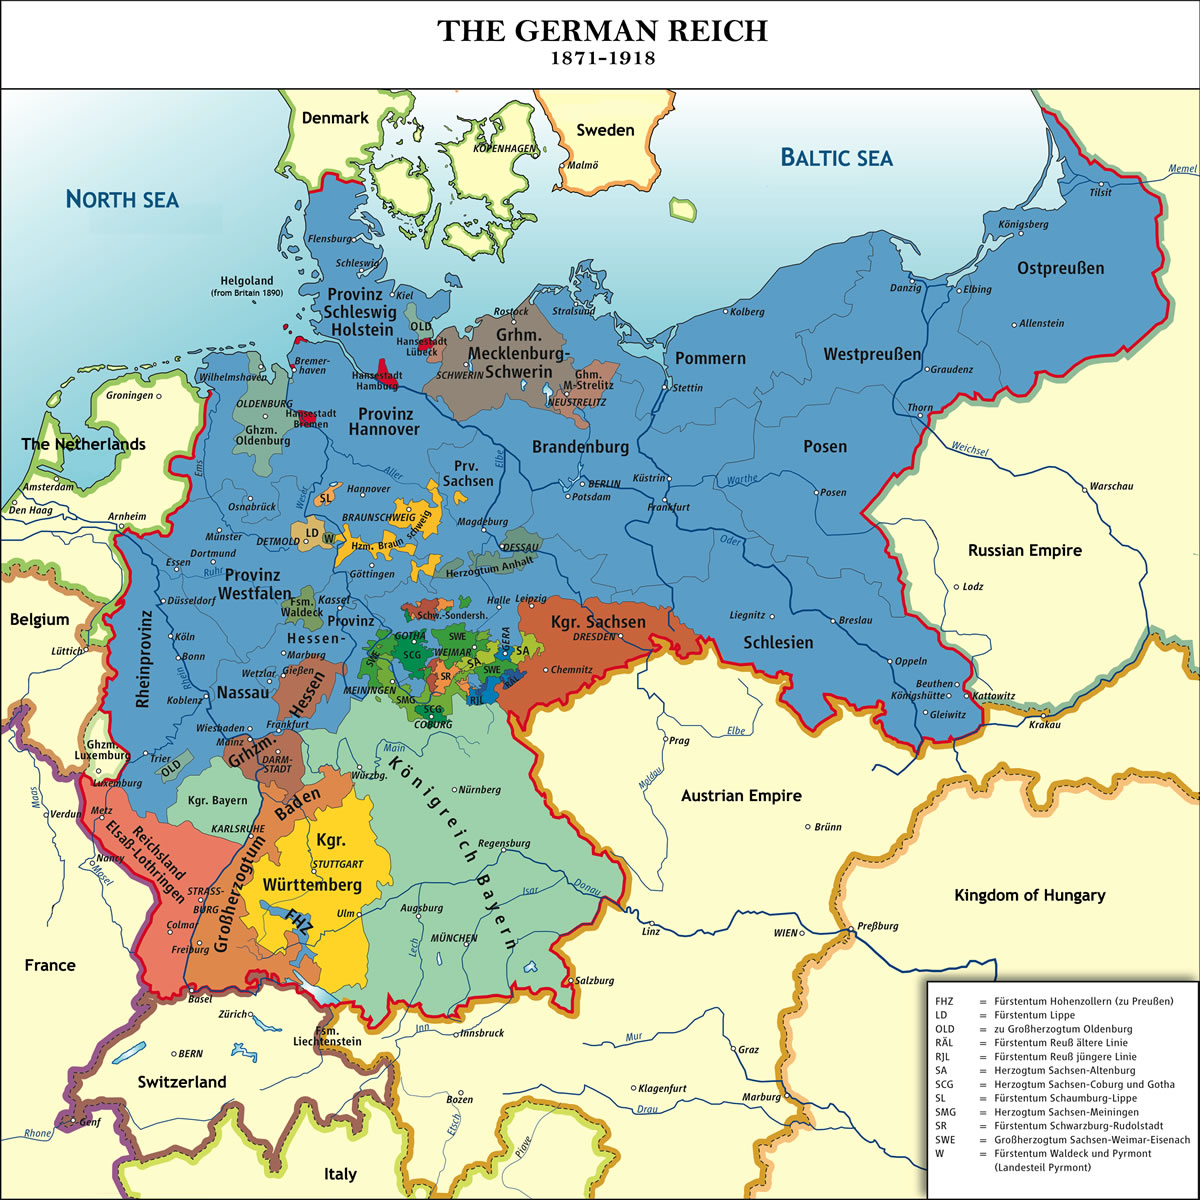 A WWI era map of Germany